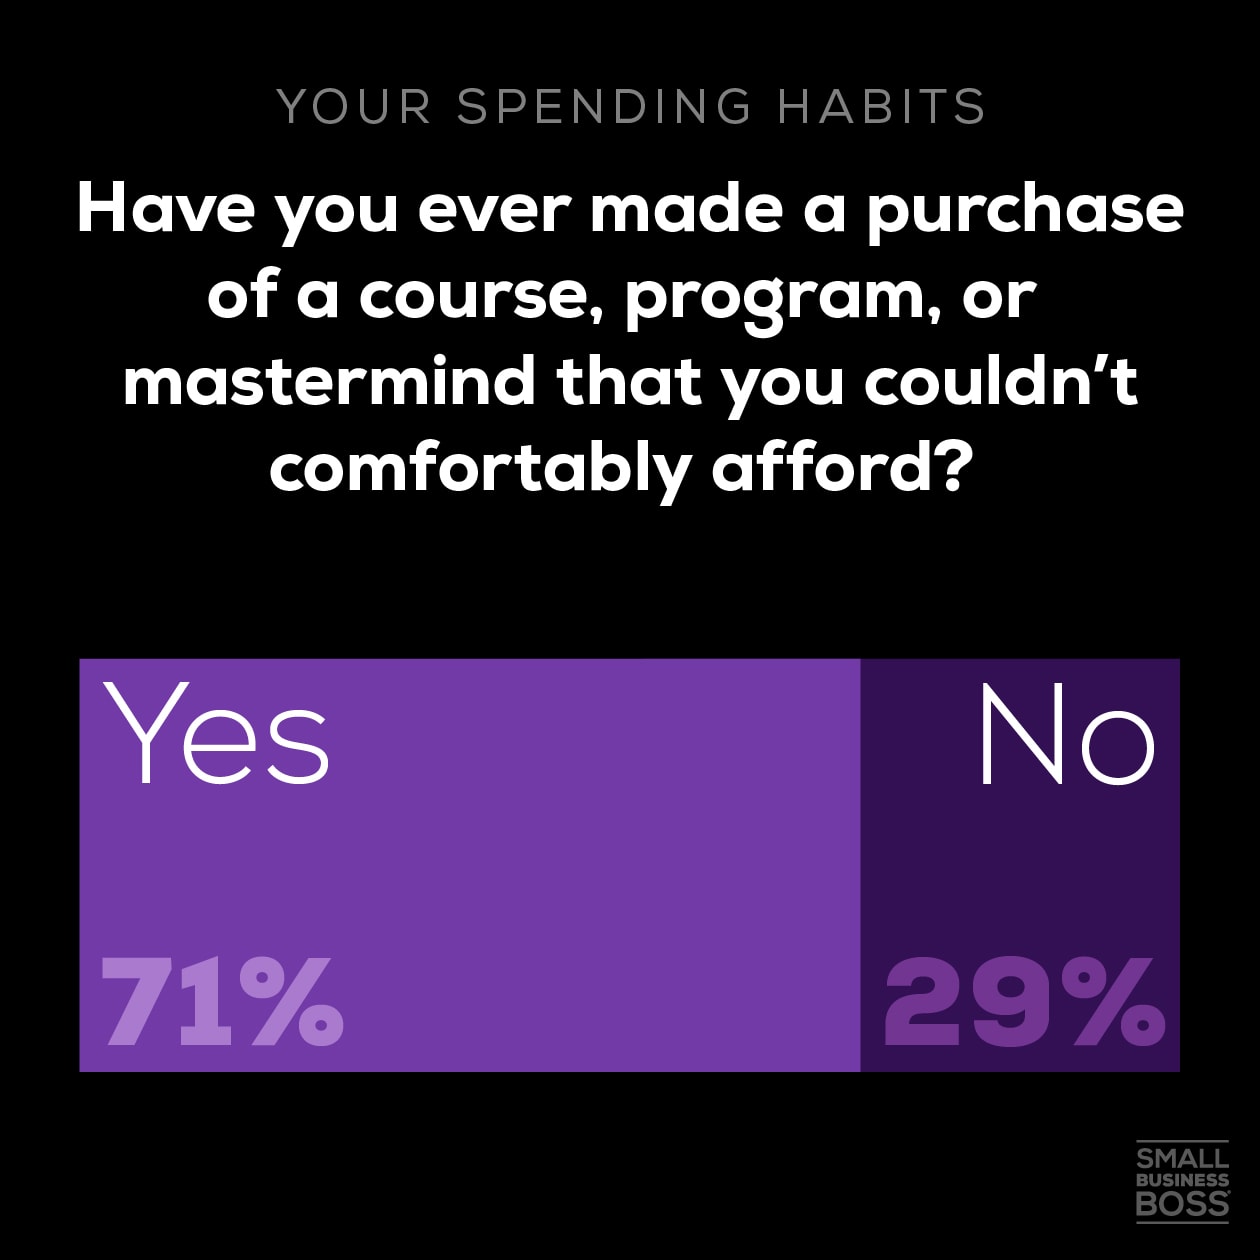 Spending habits-afford